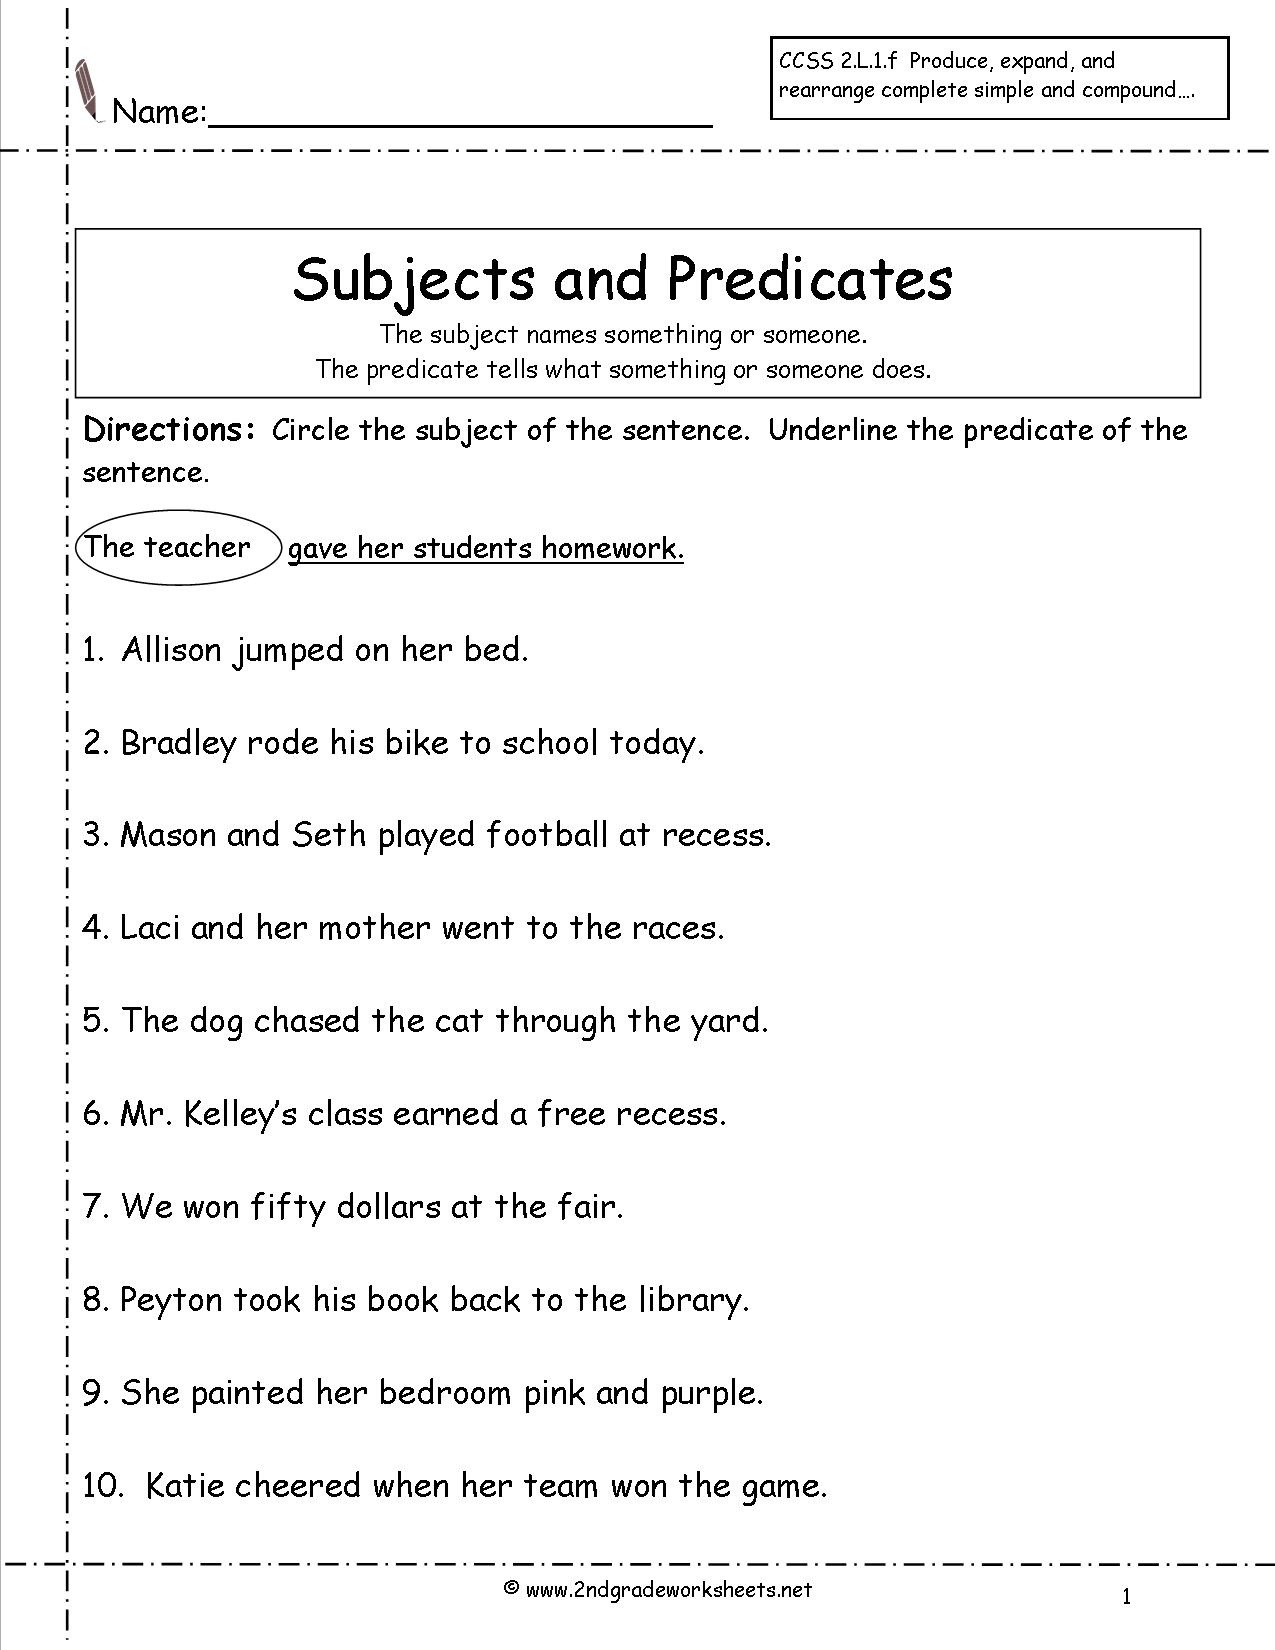 Second Grade Sentences Worksheets Ccss 2 l 1 f Worksheets Free Printable Subject Predicate